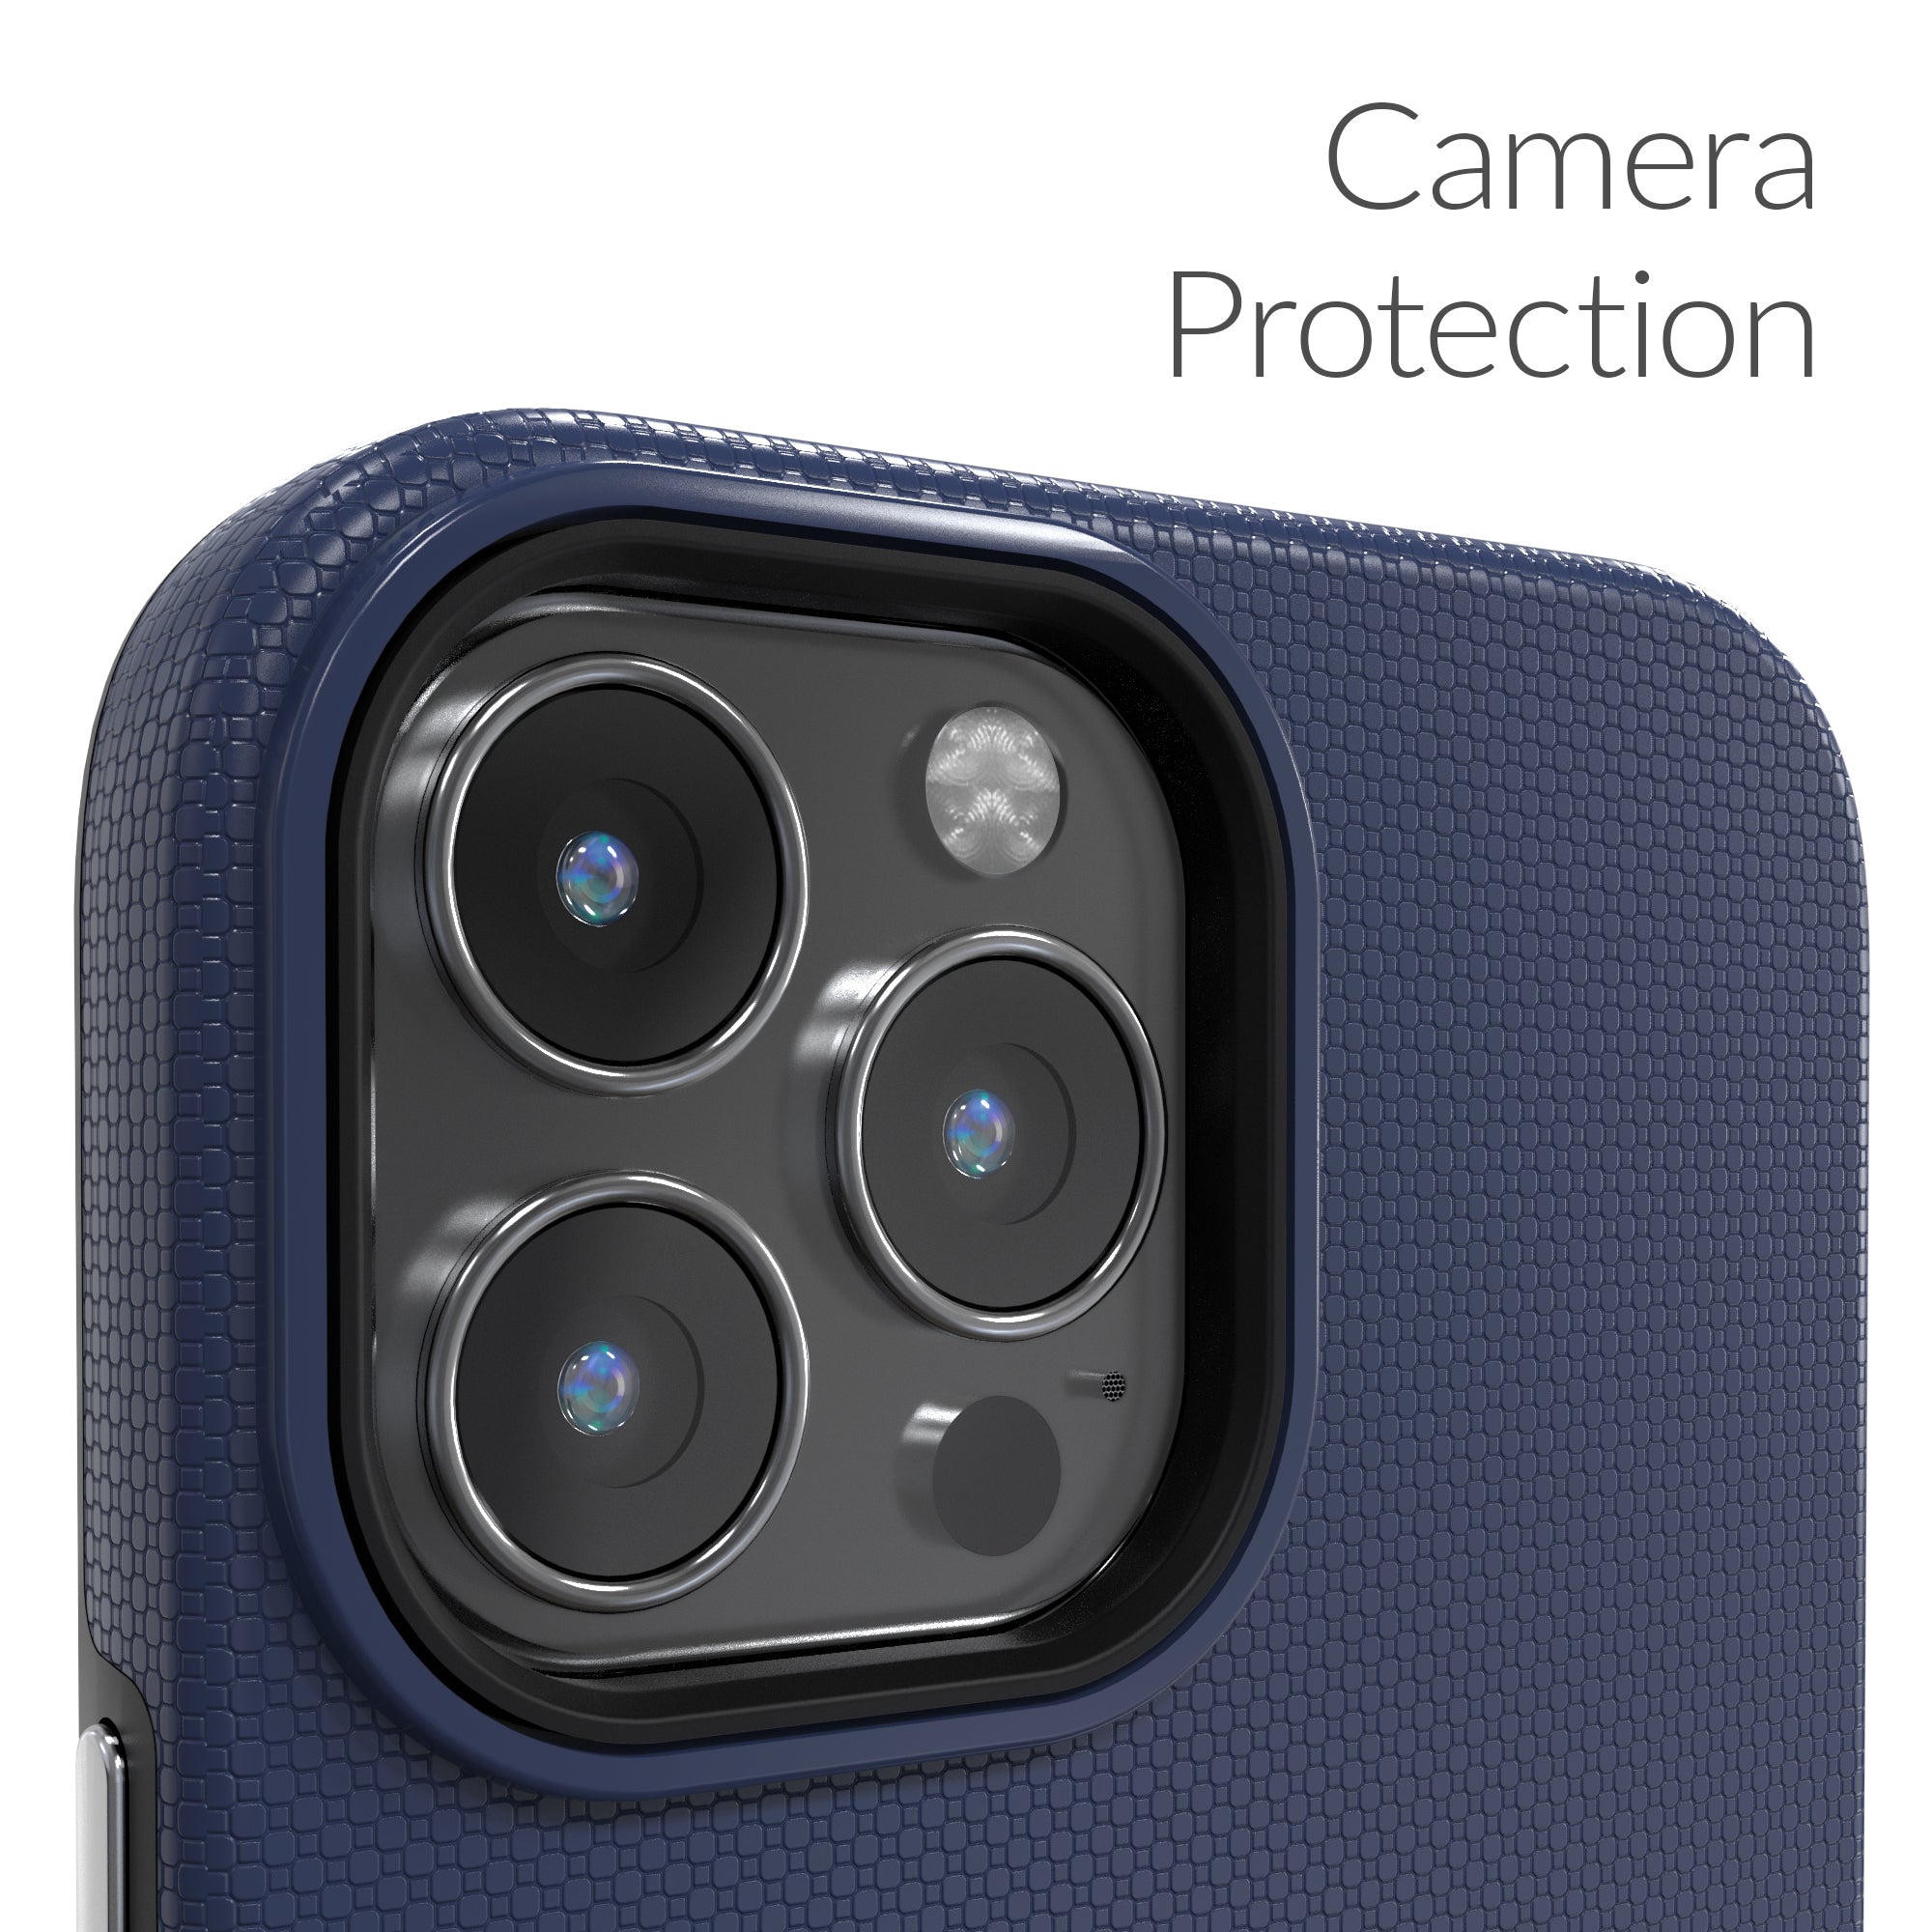 iPhone 13 Pro Max Case Dual Guard